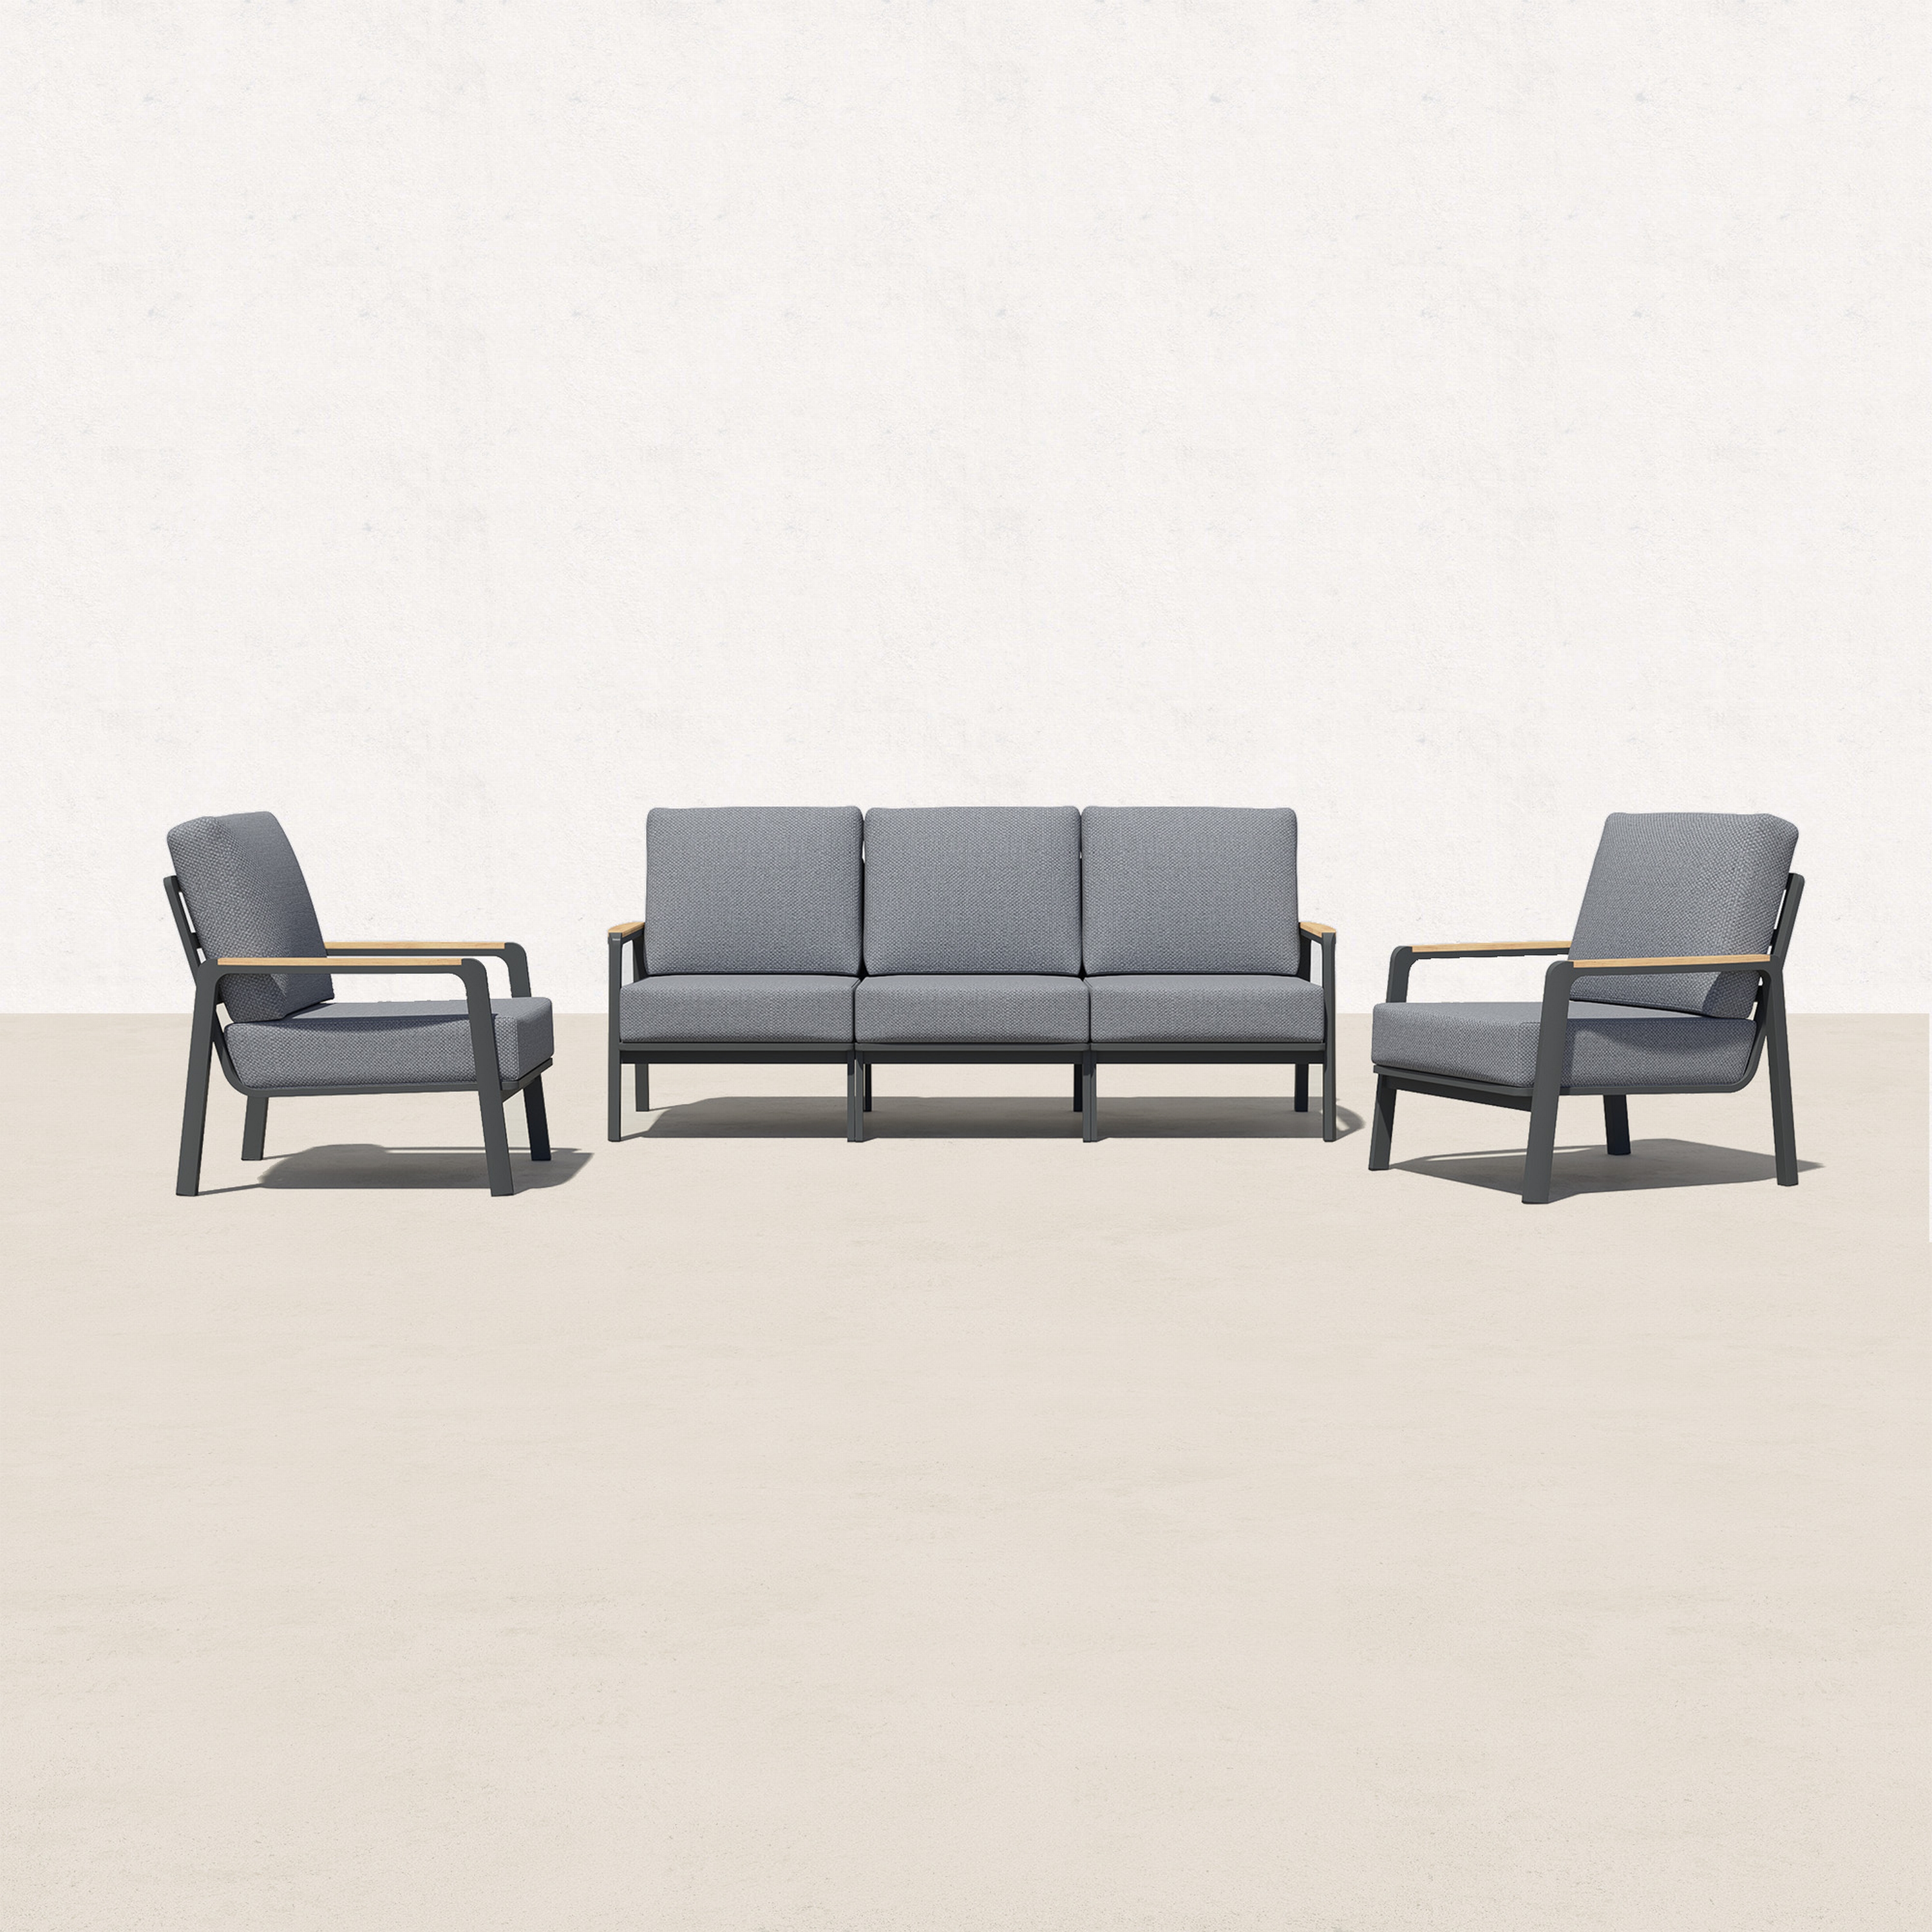 Orion Teak Outdoor Sofa with Armchairs - 5 Seat-Baeryon Furniture